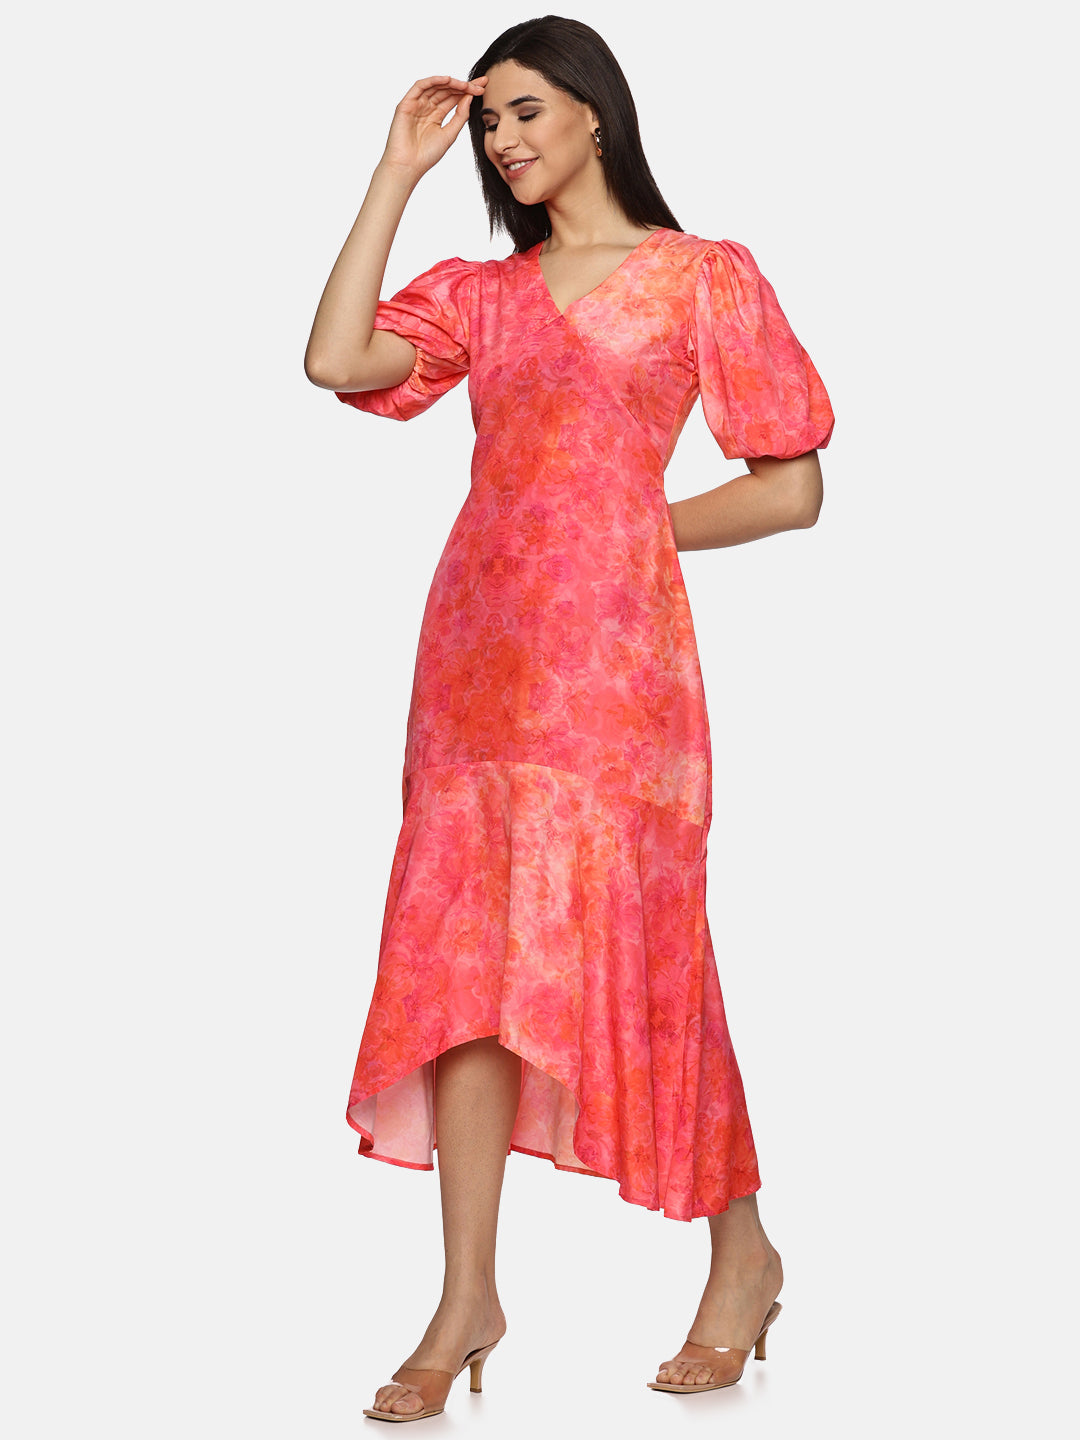 IS.U Floral Pink High Low Midaxi Dress